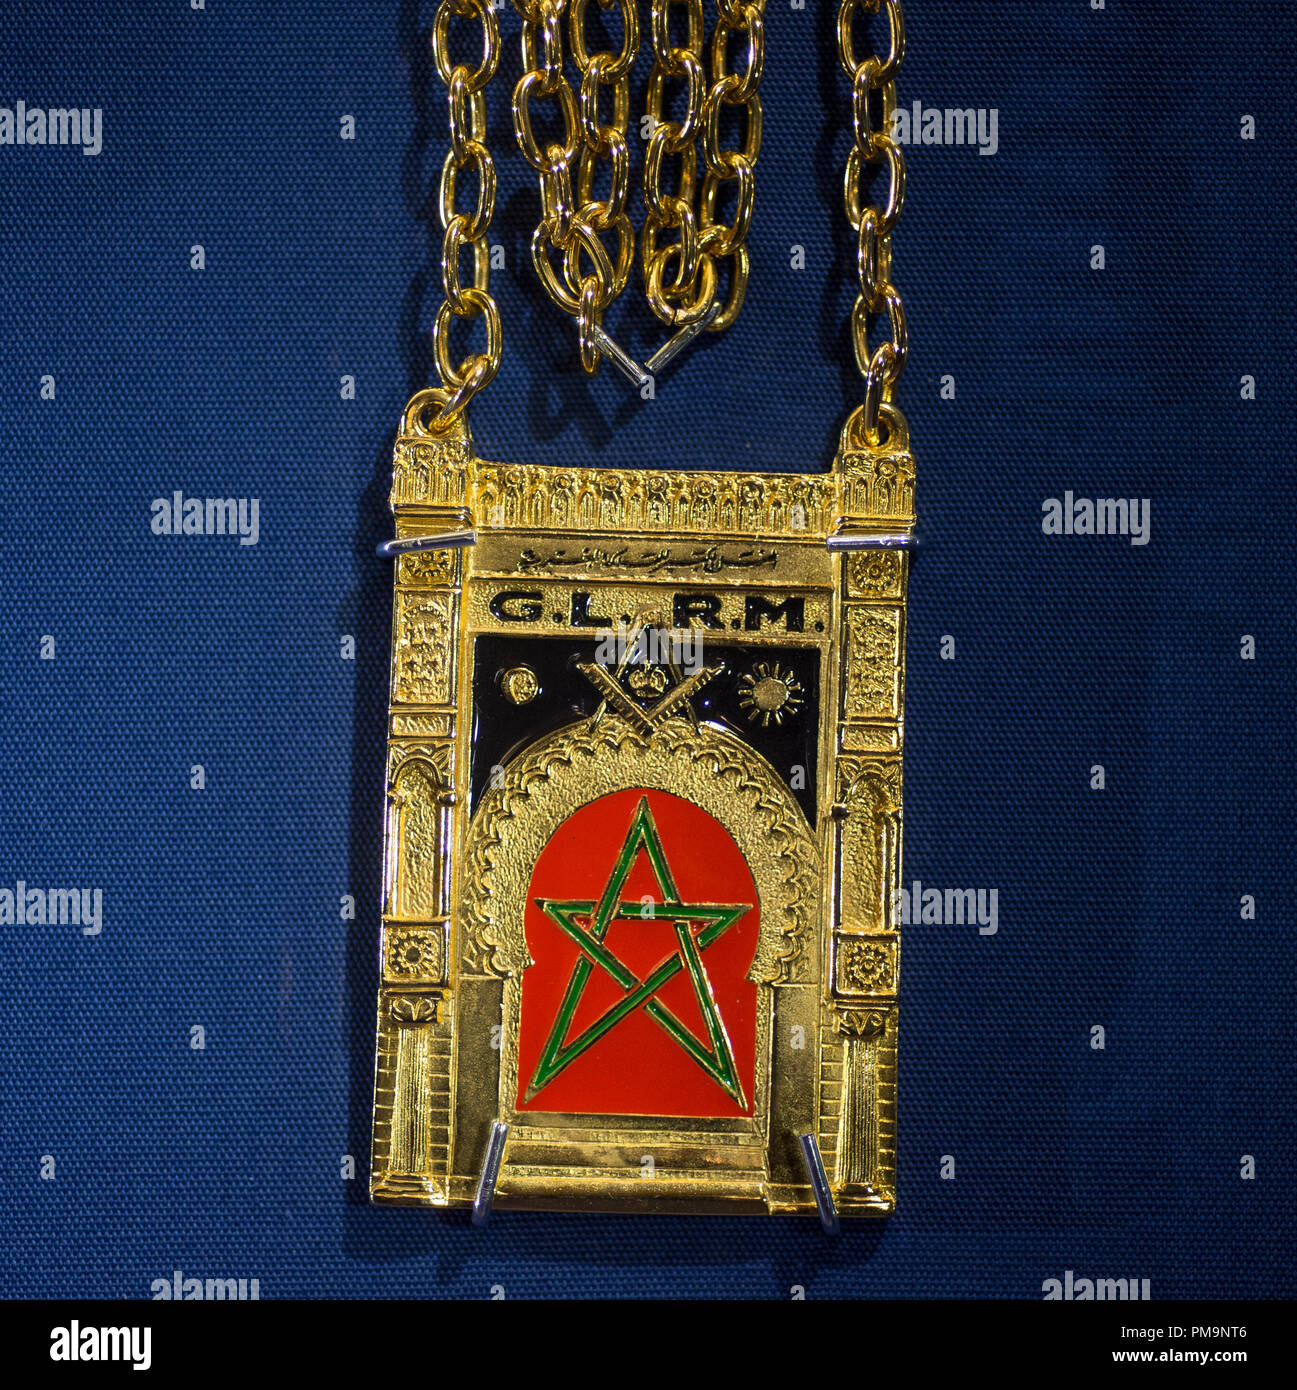 Freemasonry England High Resolution Stock Photography and Images - Alamy